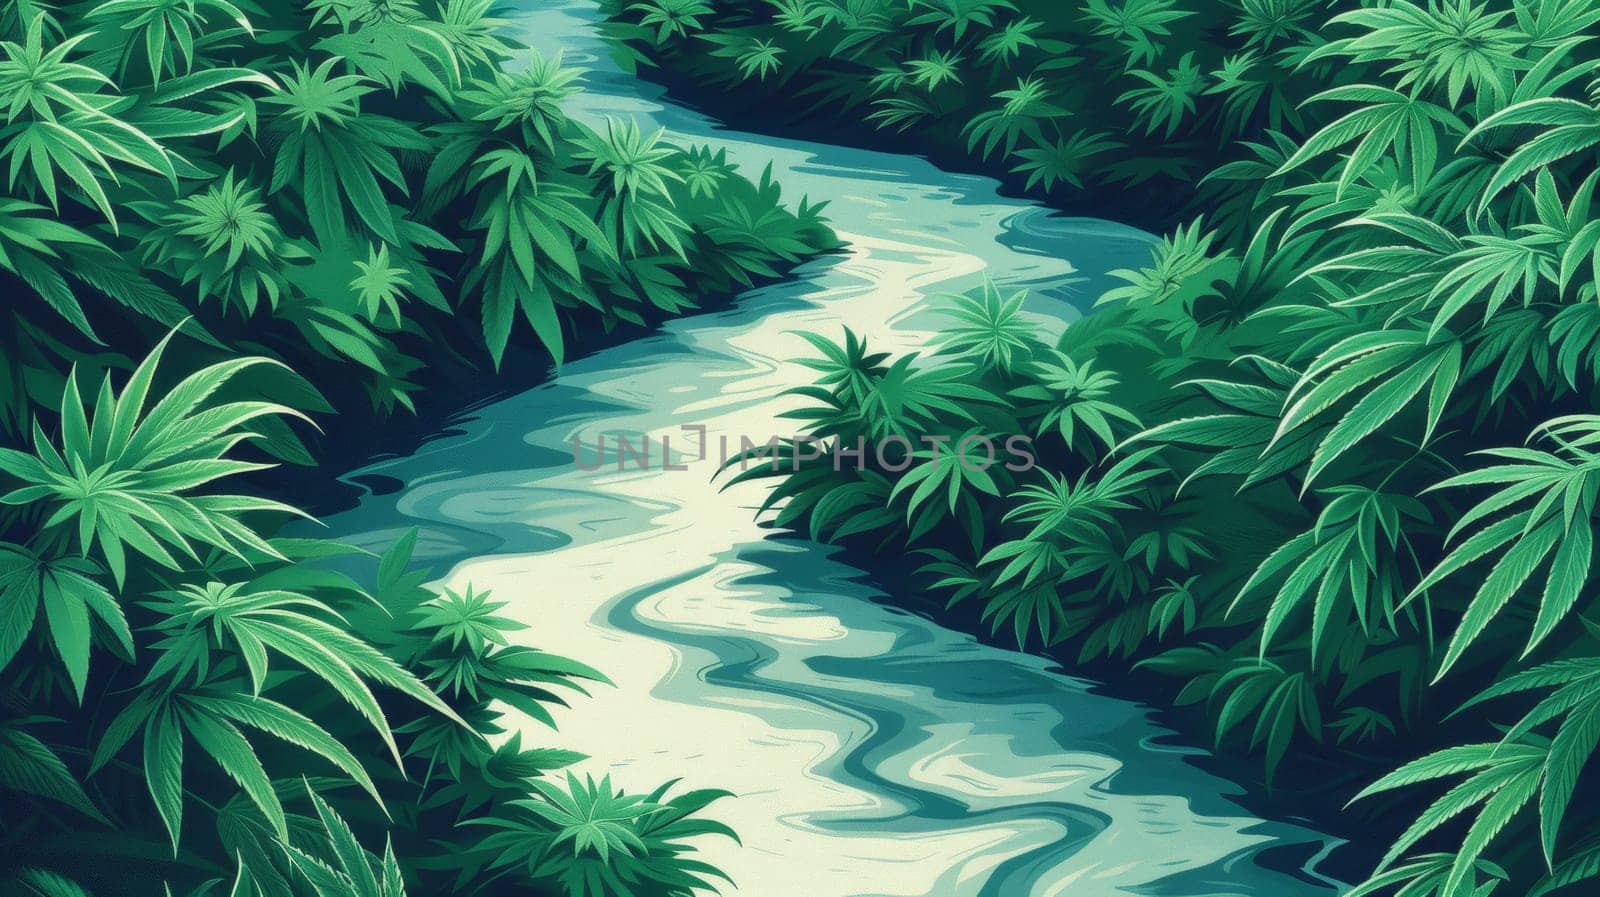 A river running through a forest of marijuana plants